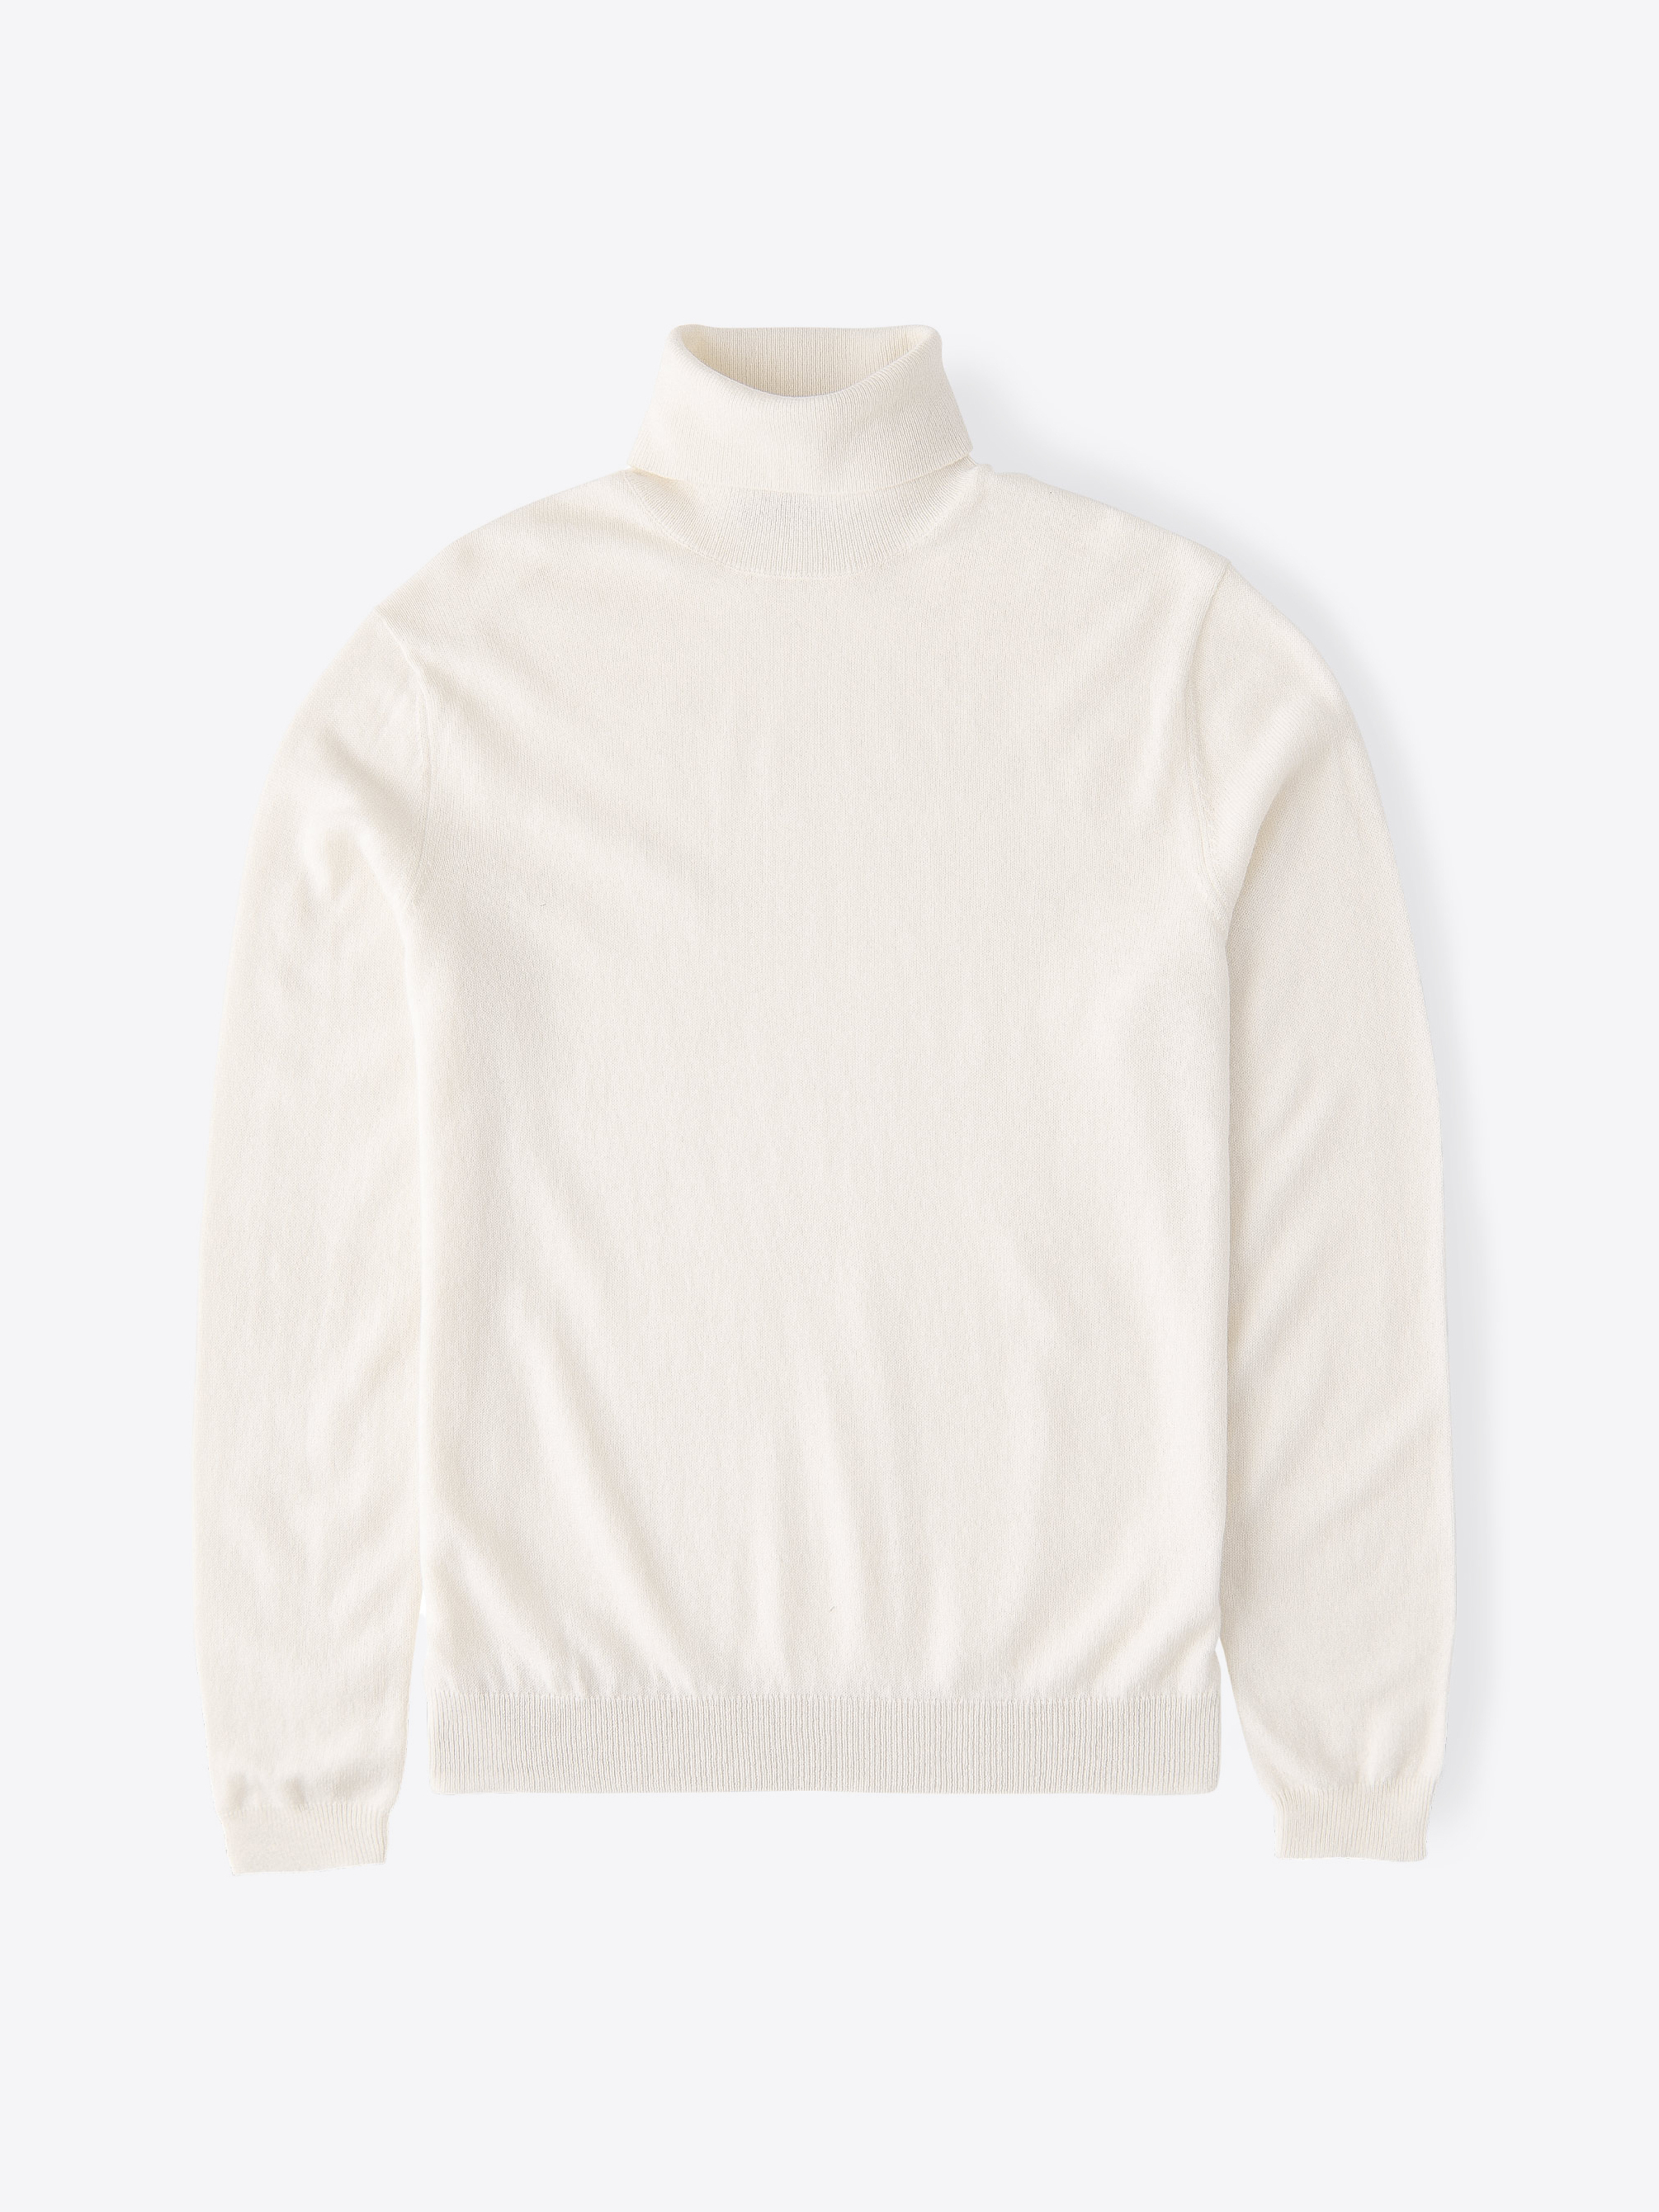 Cream Cashmere Turtleneck Sweater by Proper Cloth